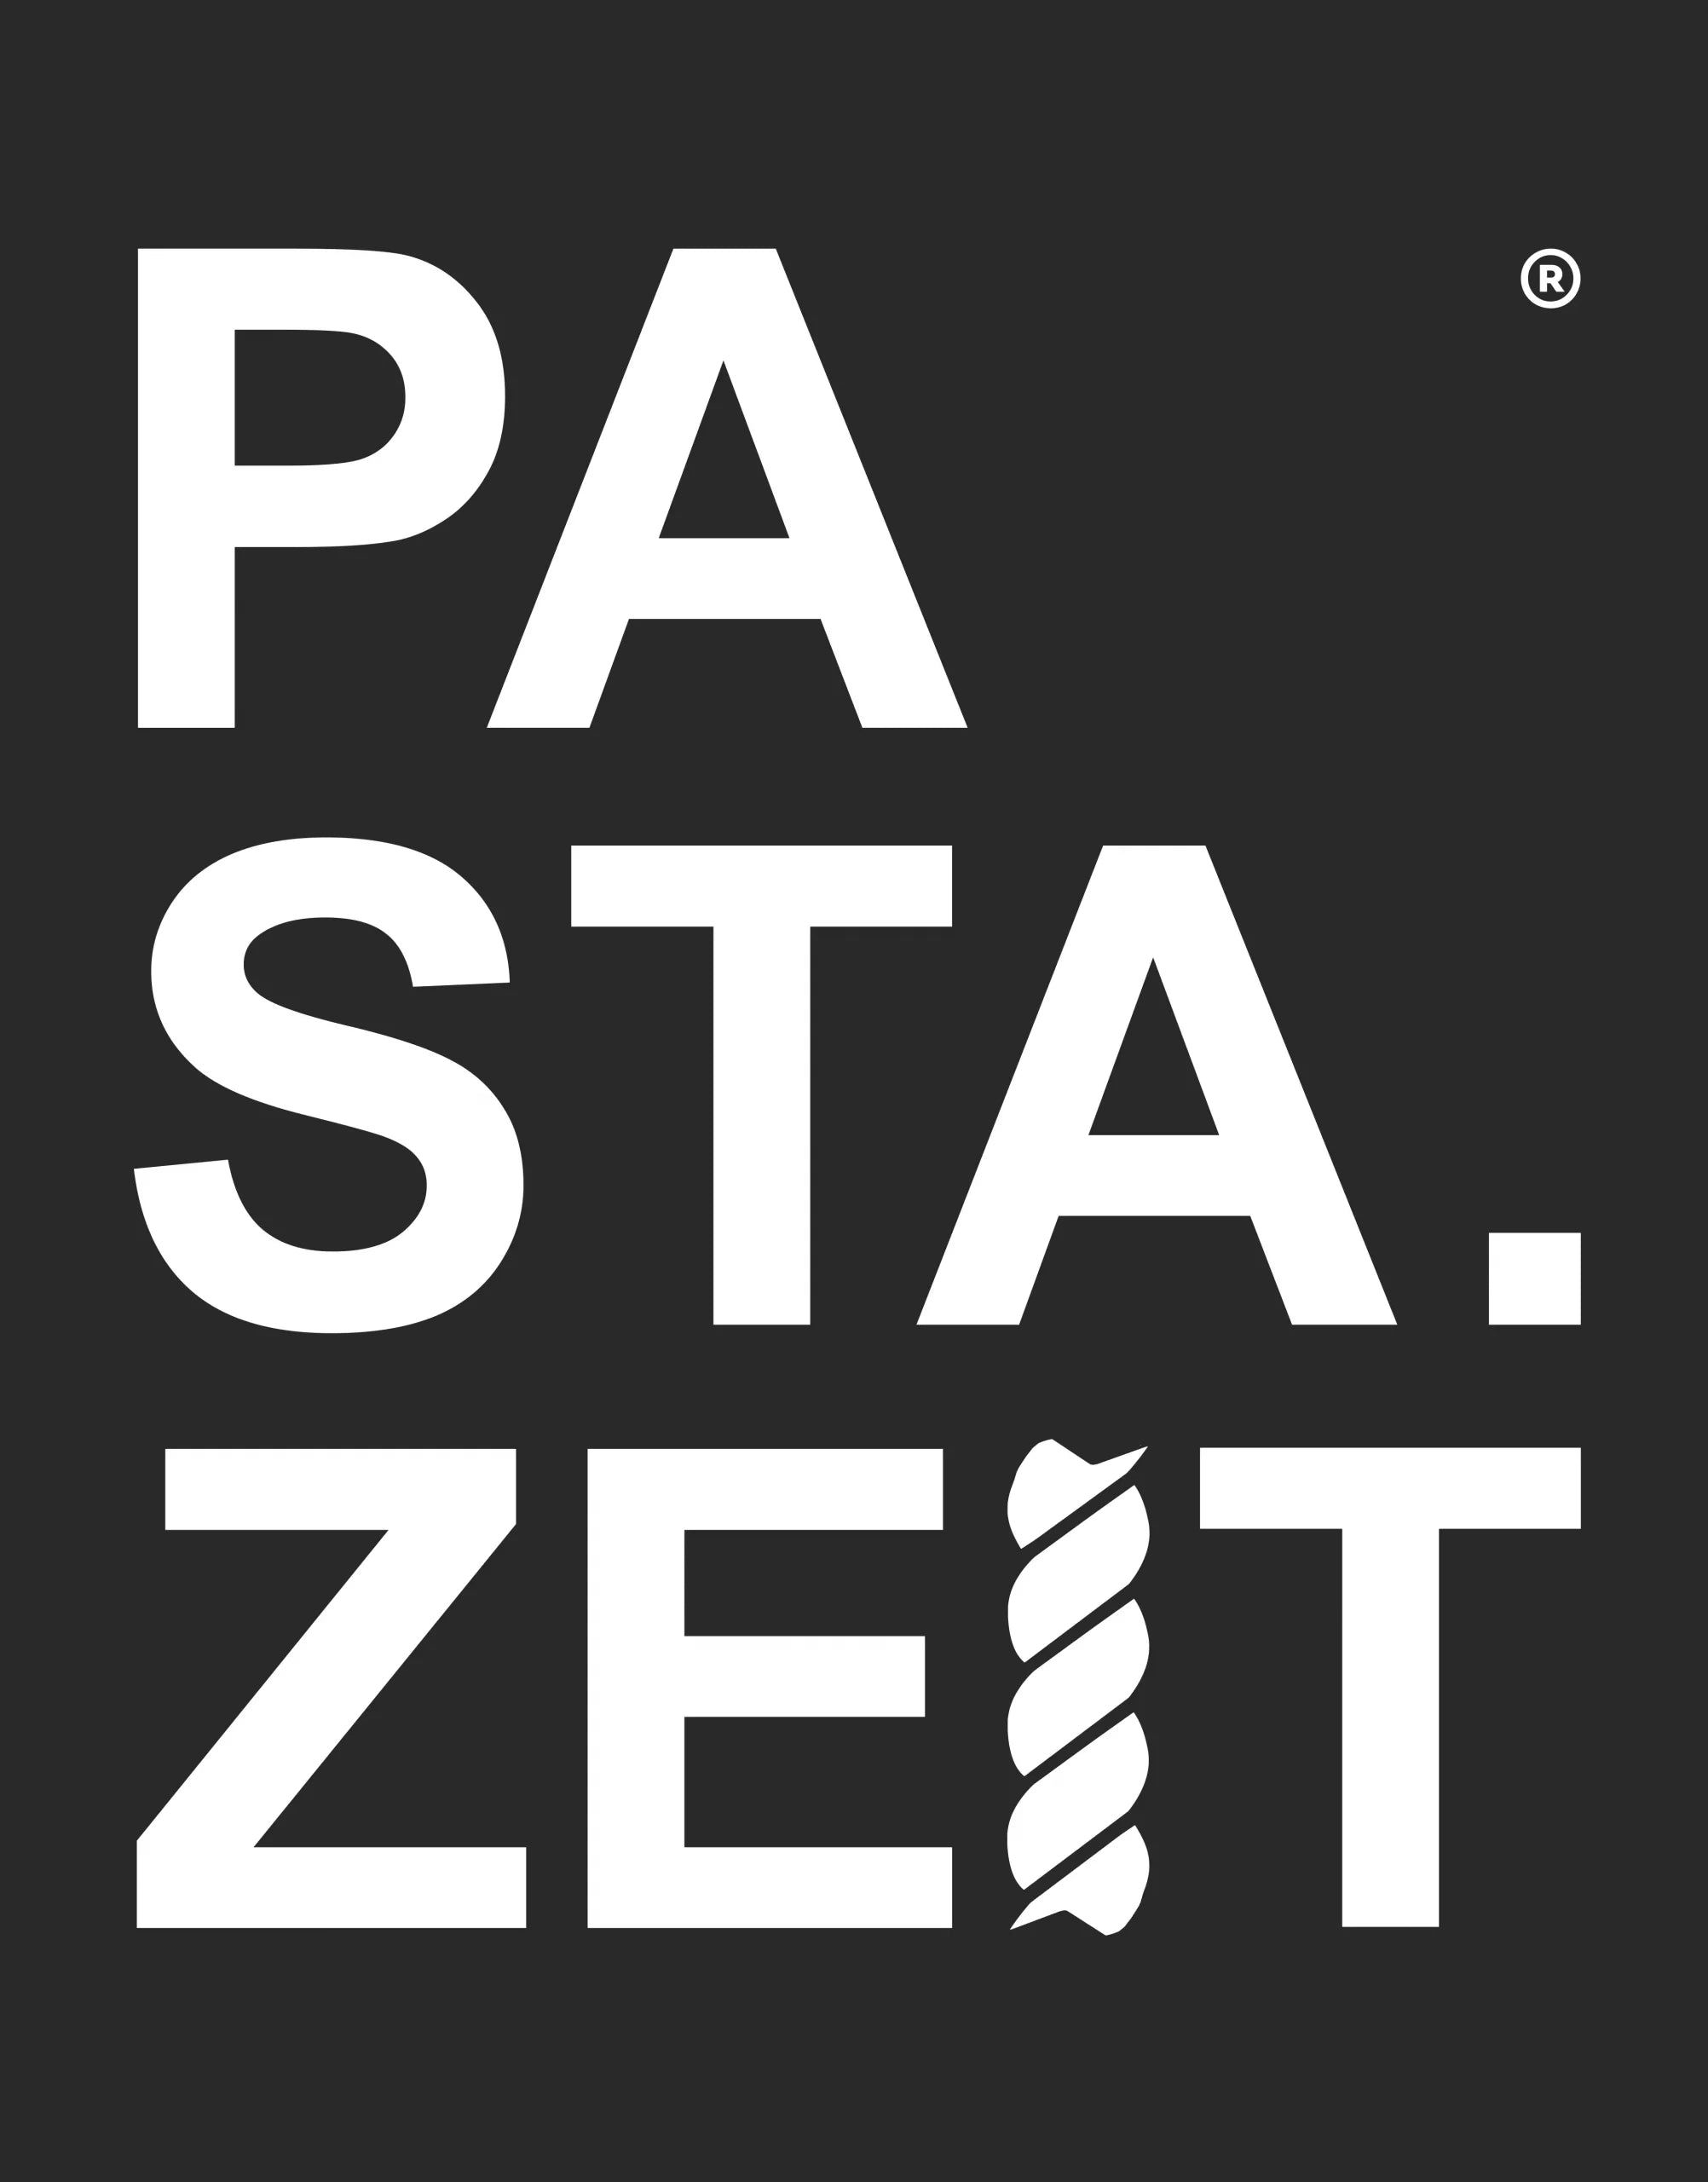 (c) Pastazeit.com